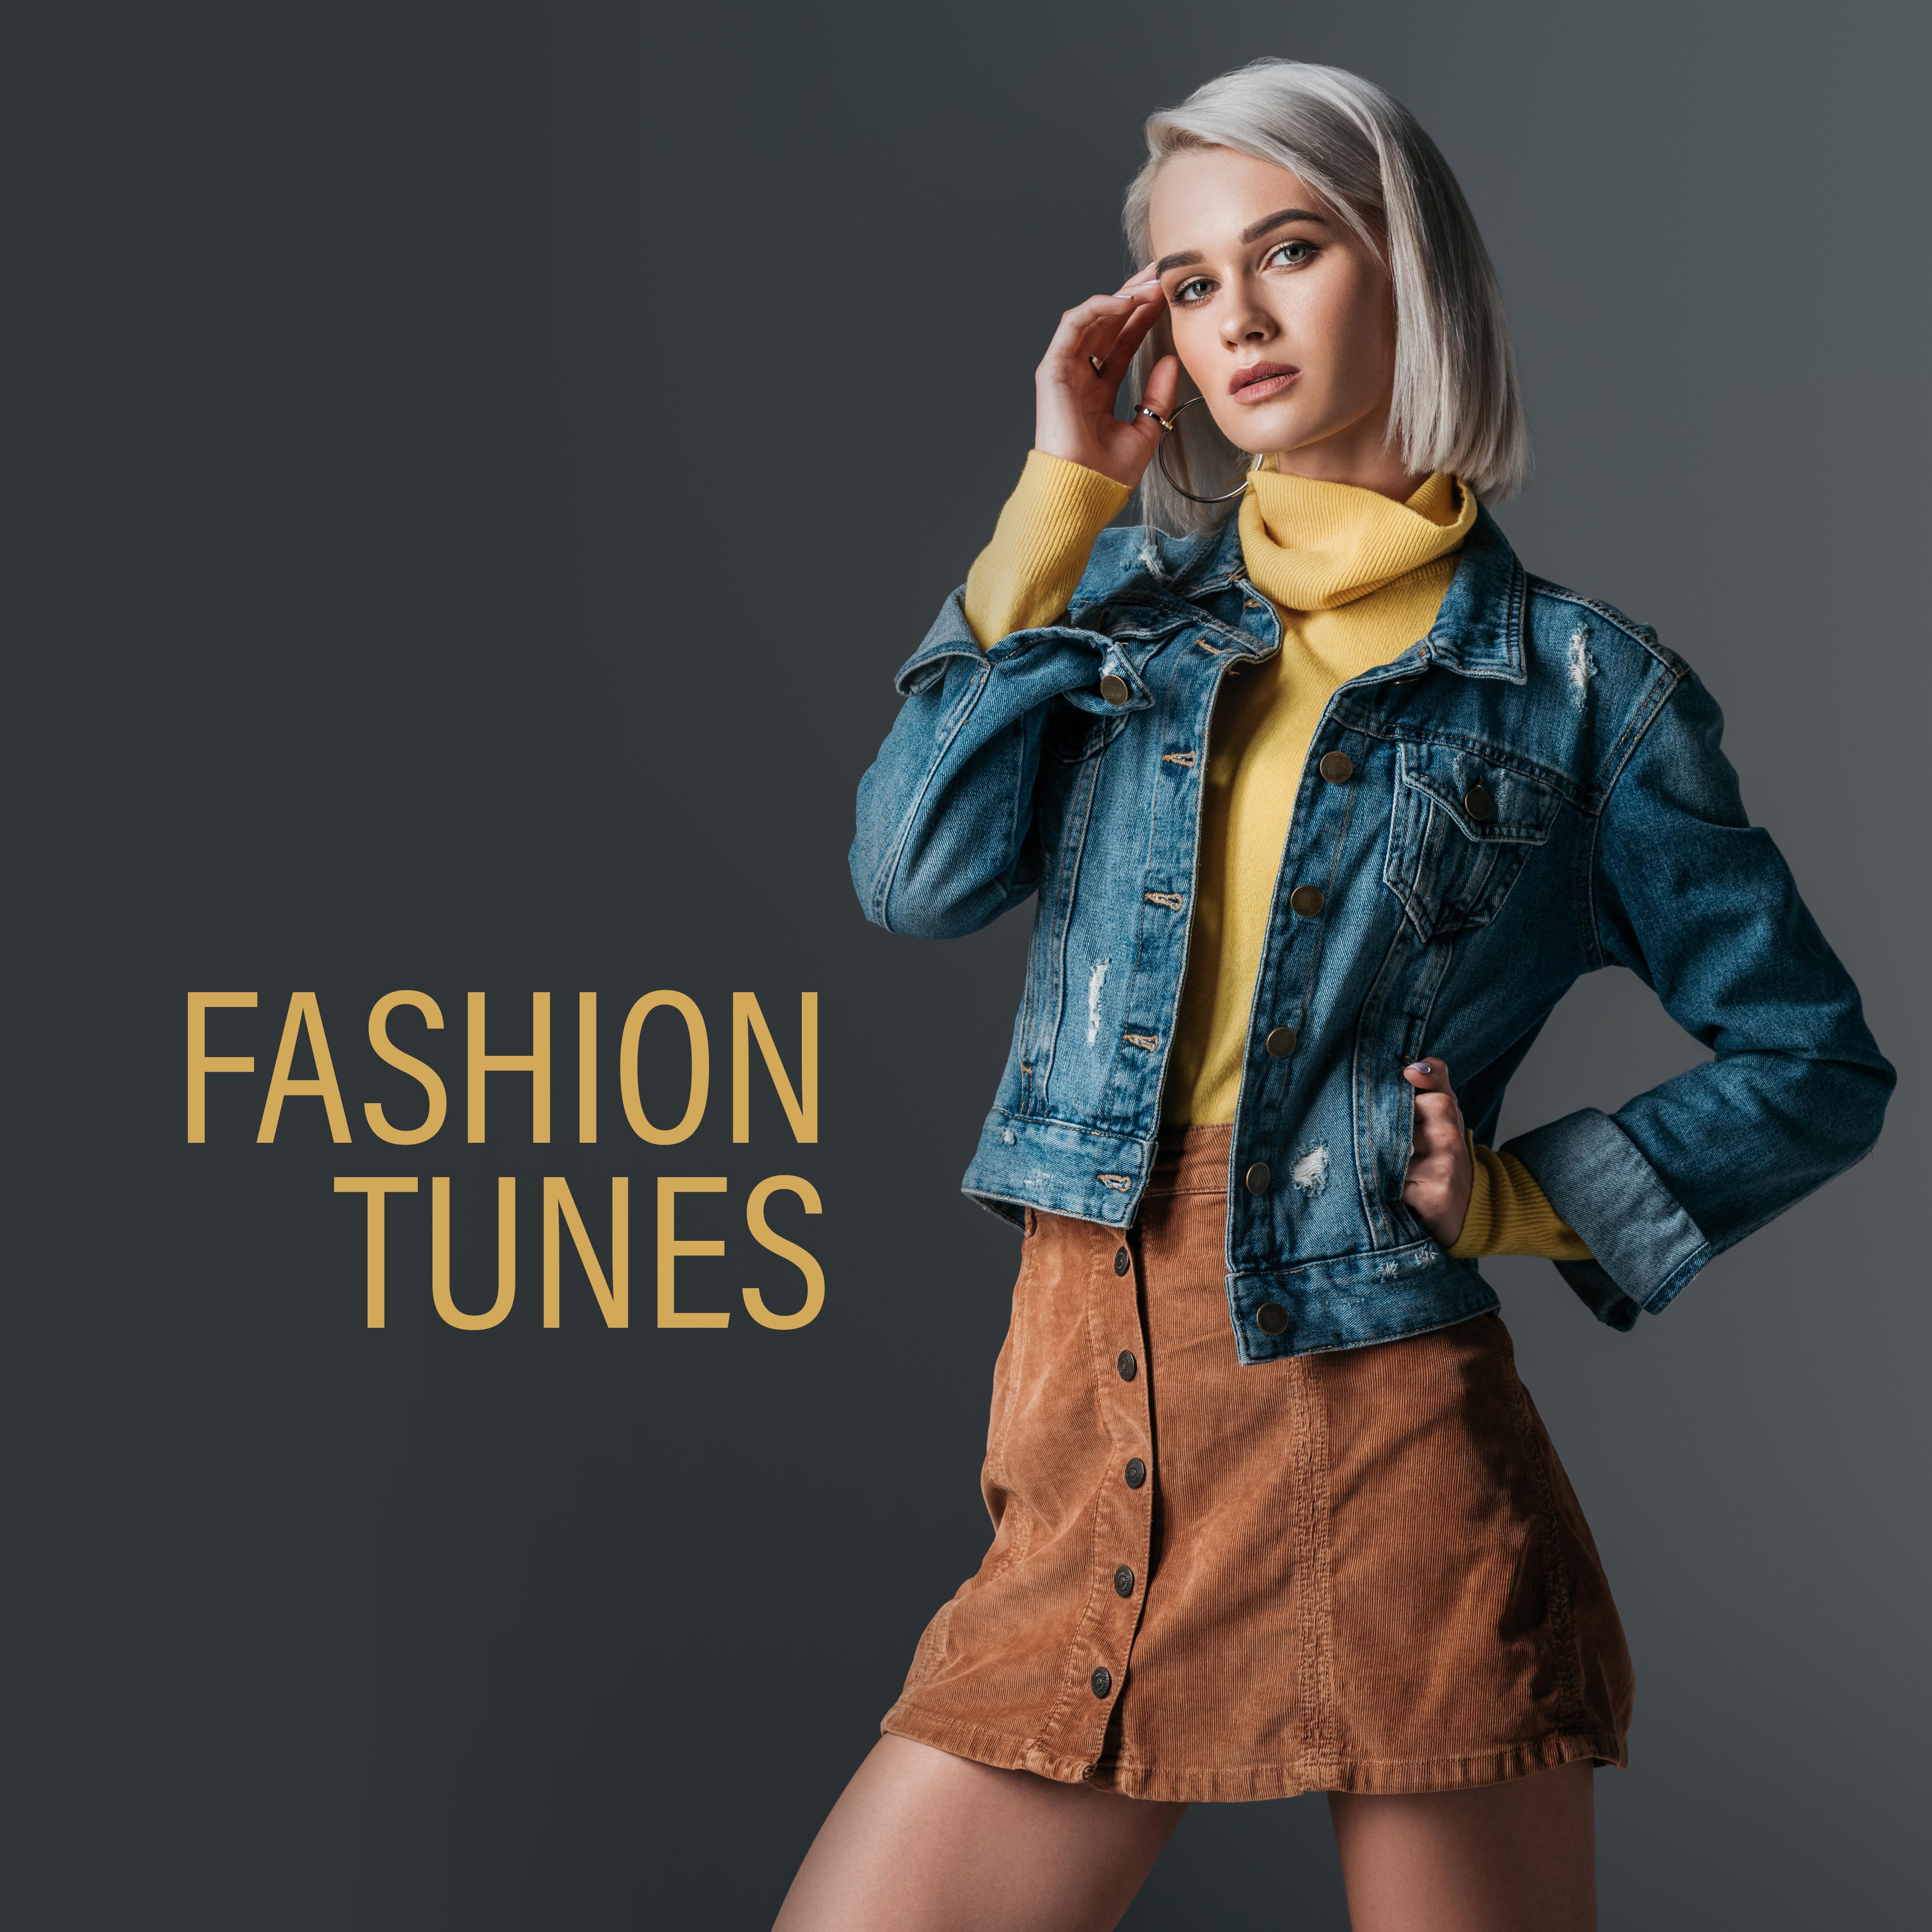 Fashion Tunes – Runway Music 2019, Chilled Mix, Fashion Beats, Chill Out 2019